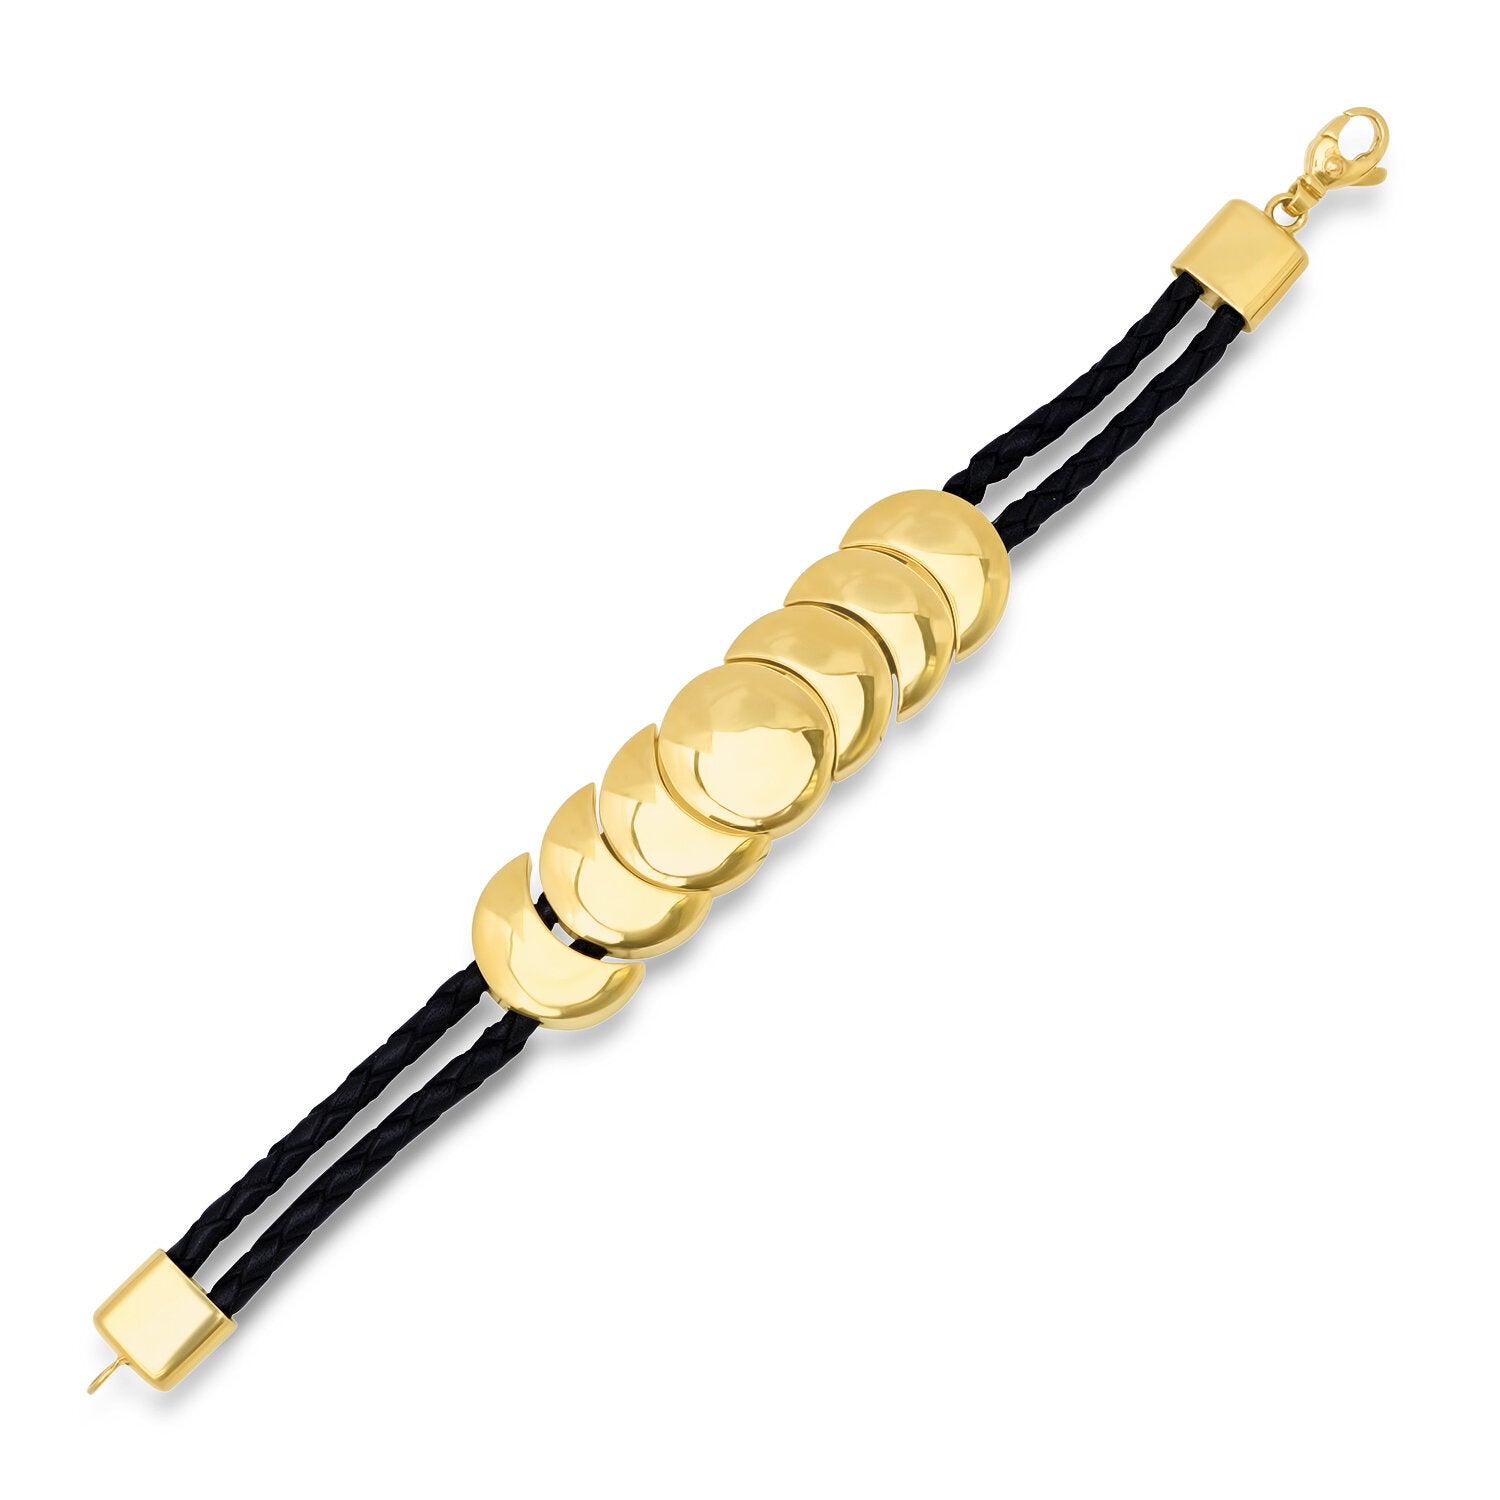 Western Gold & Leather Bracelet